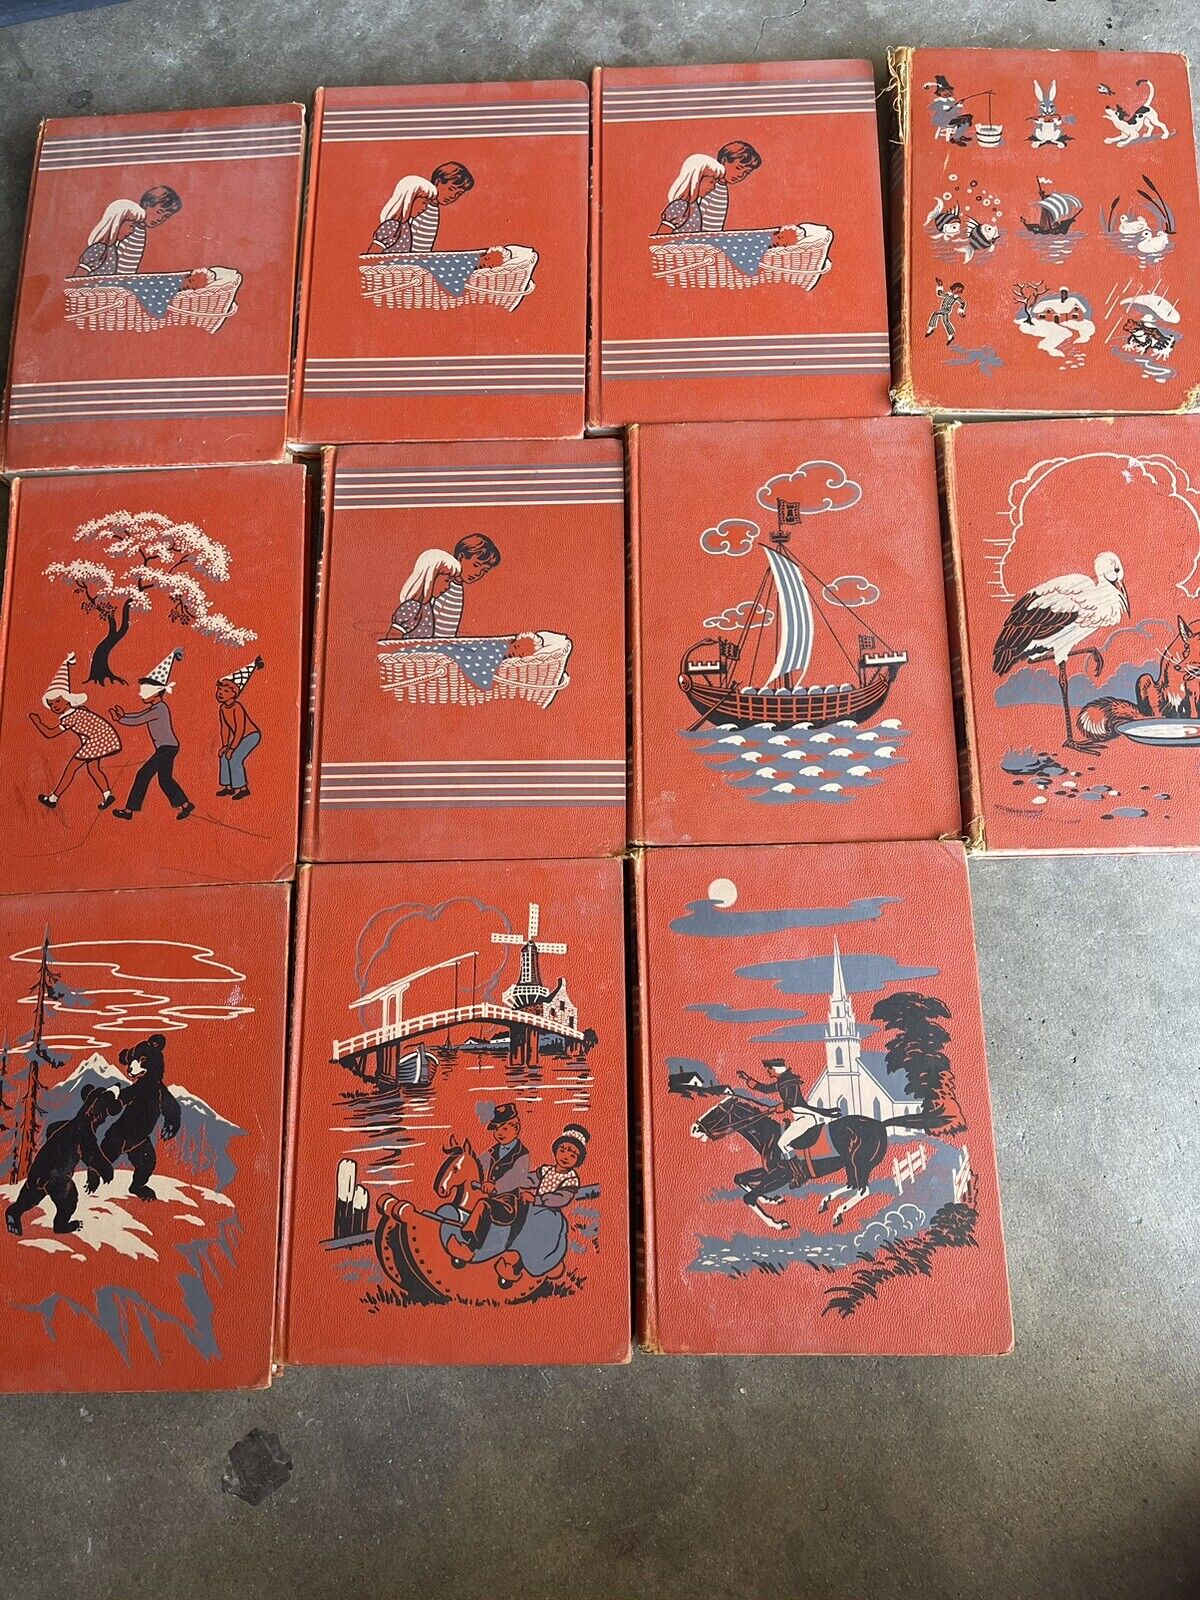 Childcraft, Vintage, 1947 Book Set, Orange Hardcover Volumes 11 Books